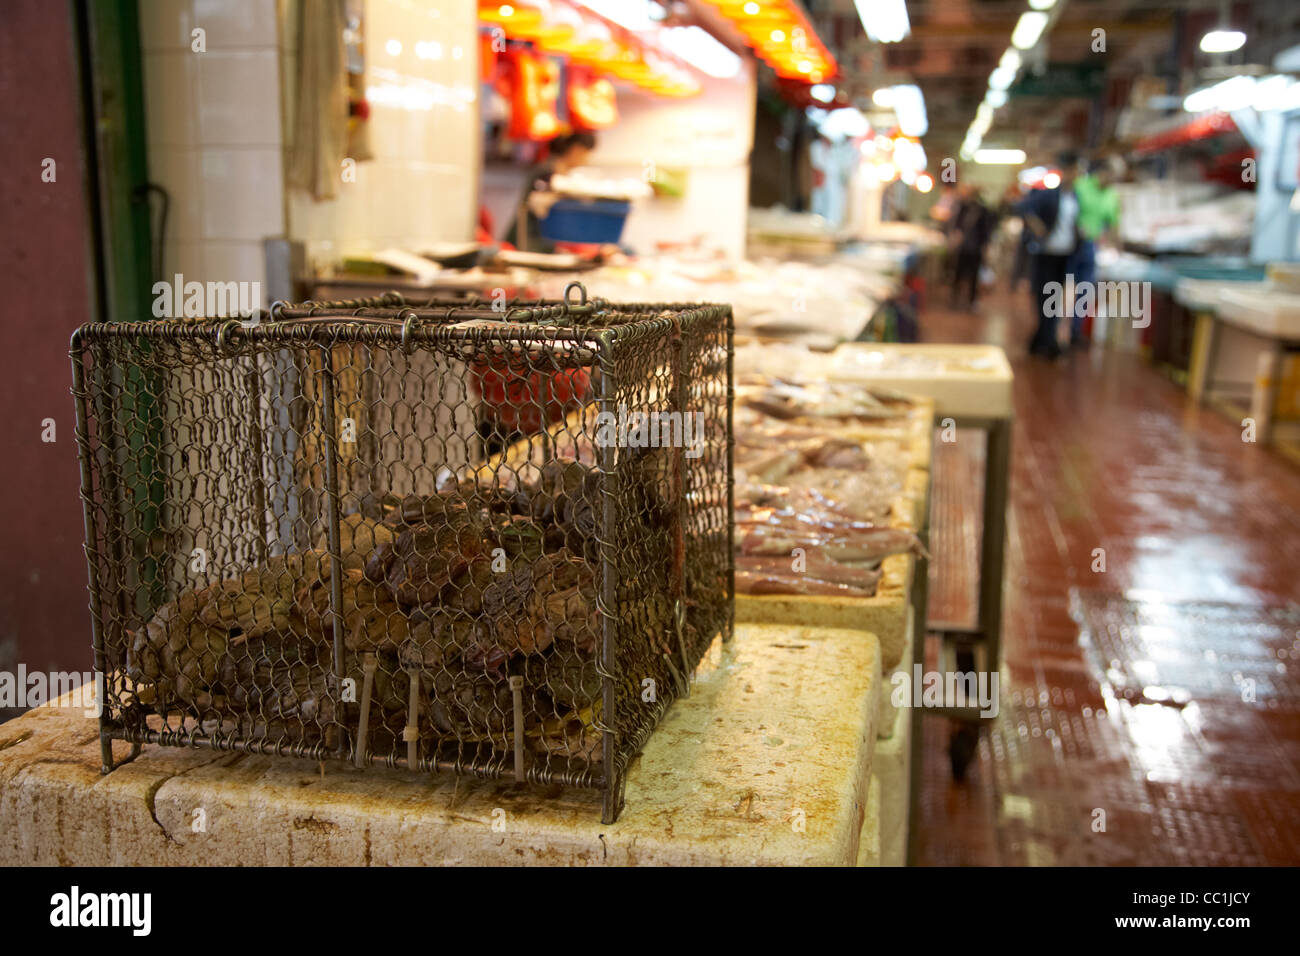 Scatola di rane in vendita Yau Ma Tei indoor mercato alimentare di Kowloon Hong kong RAS di Hong kong cina asia Foto Stock